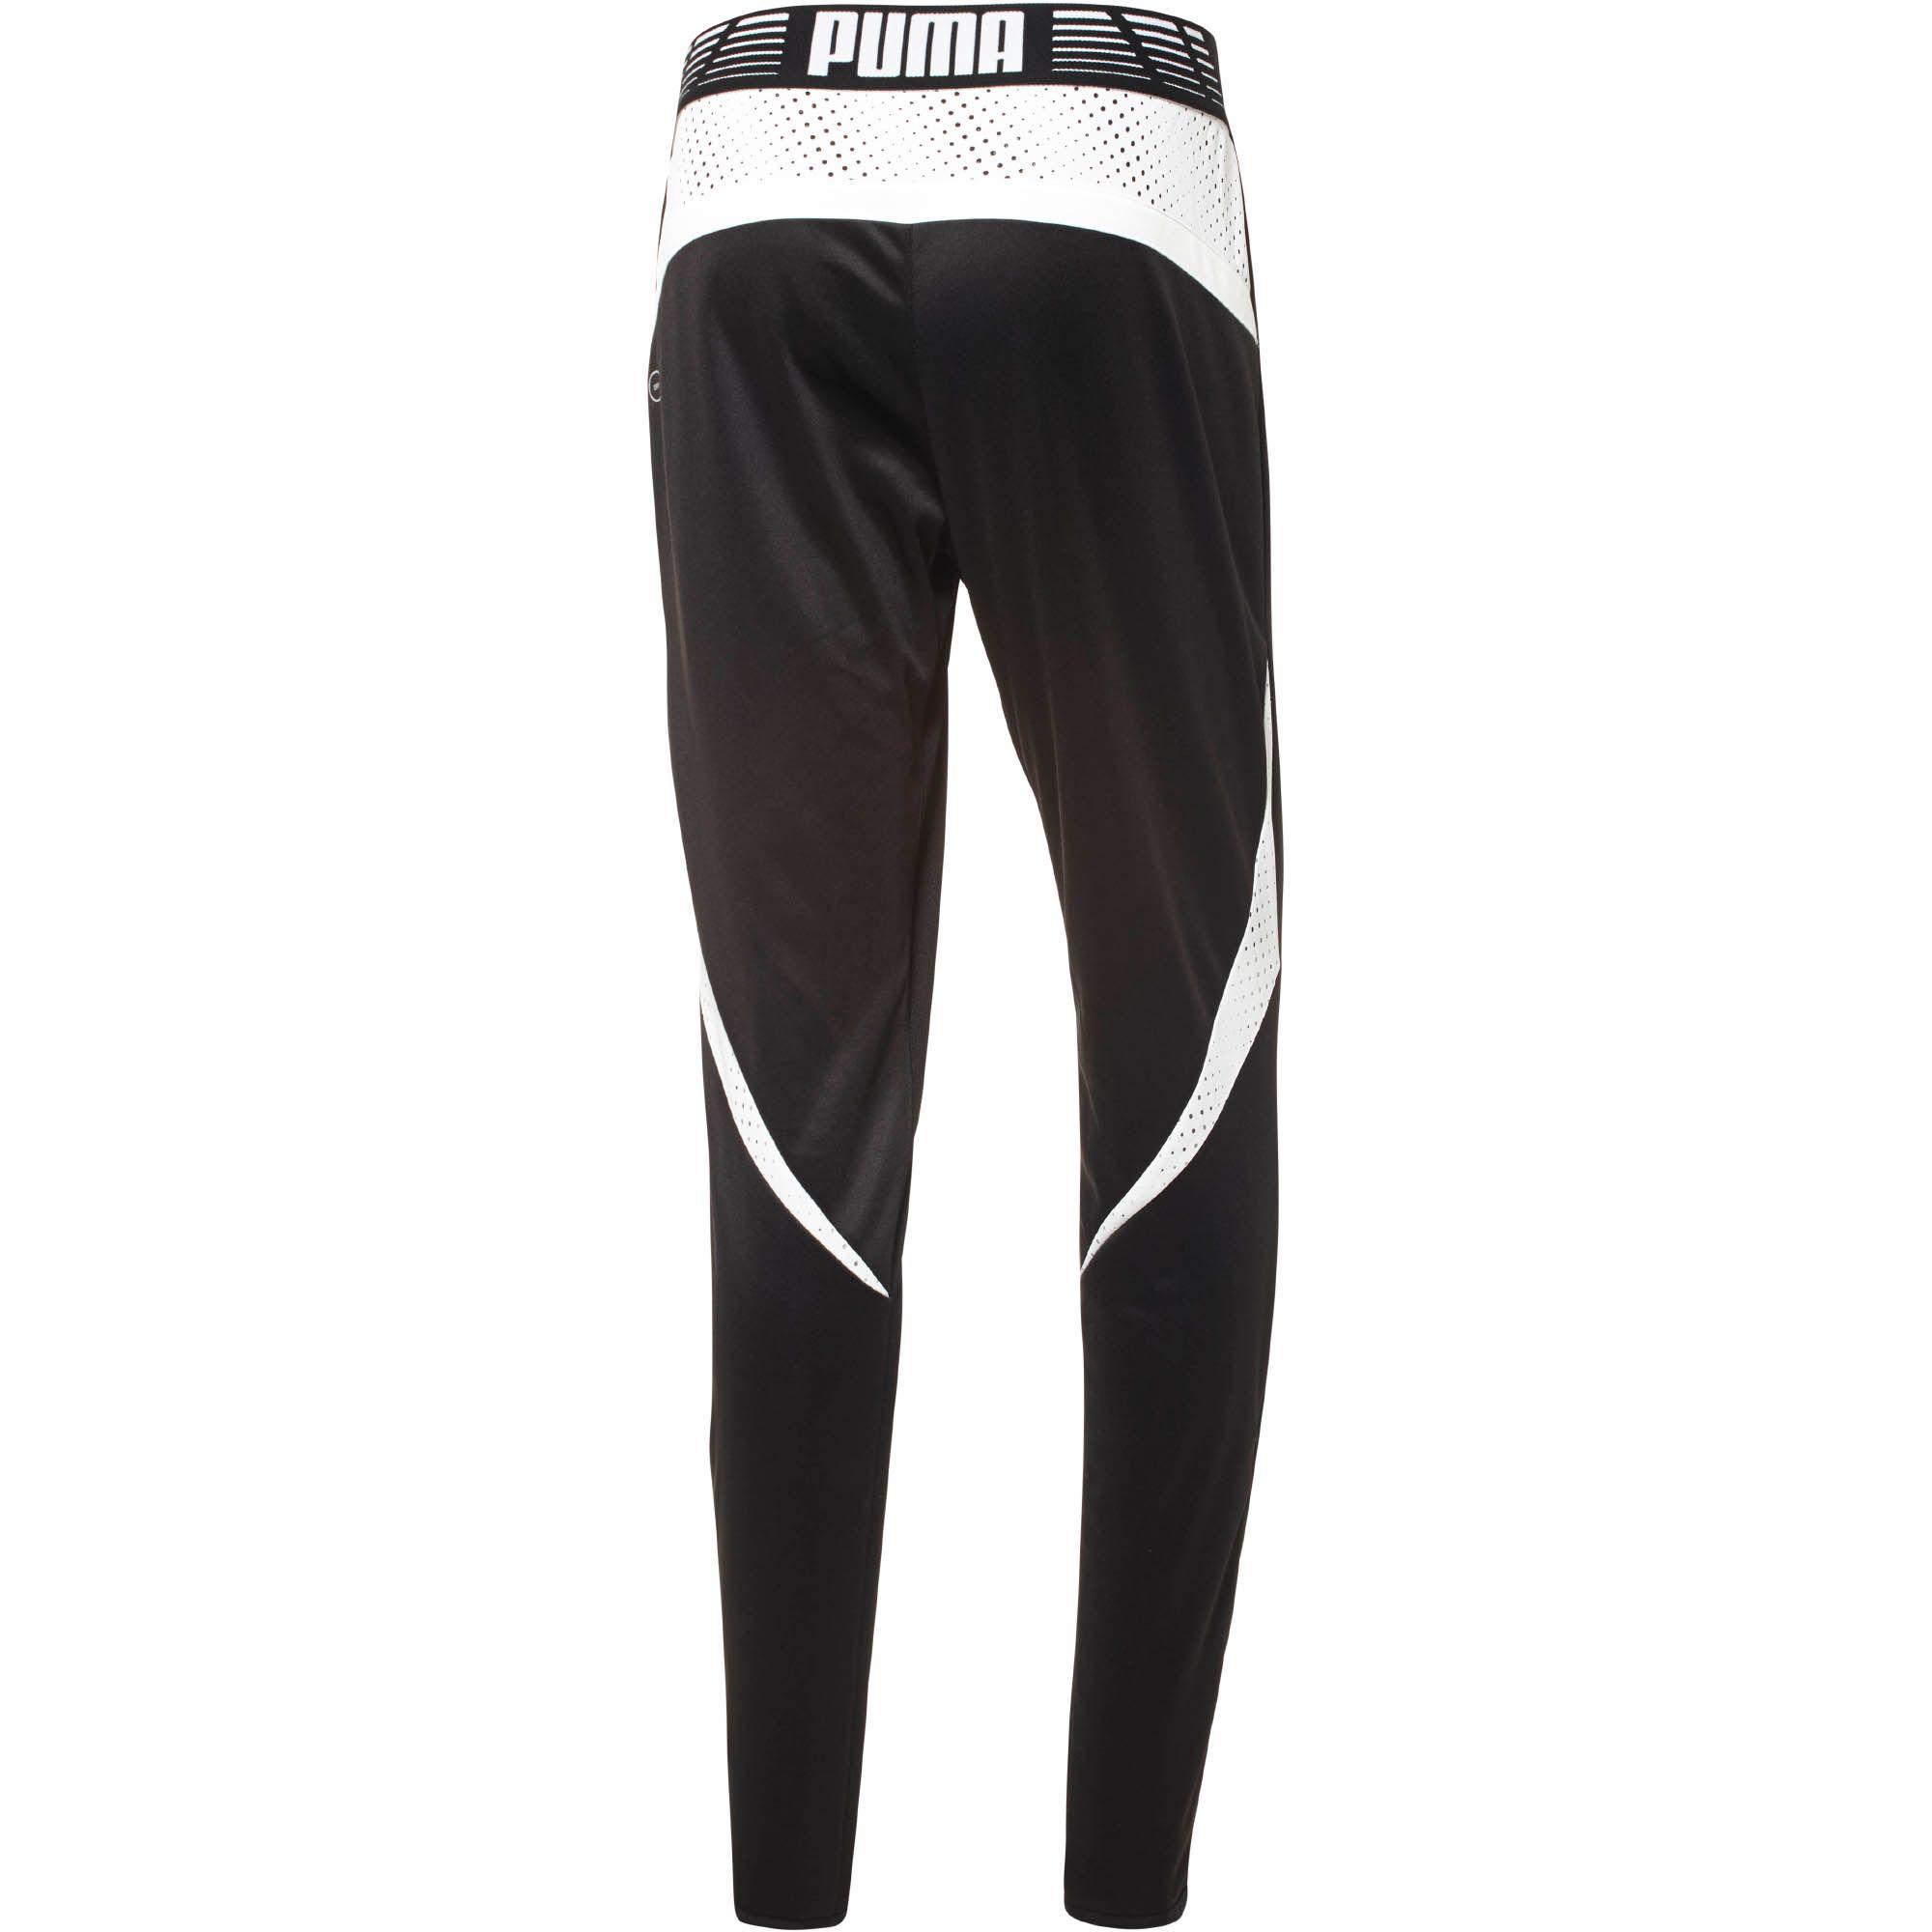 PUMA Synthetic Flicker Men's Training Pants in Black-White (Black) for Men  - Lyst